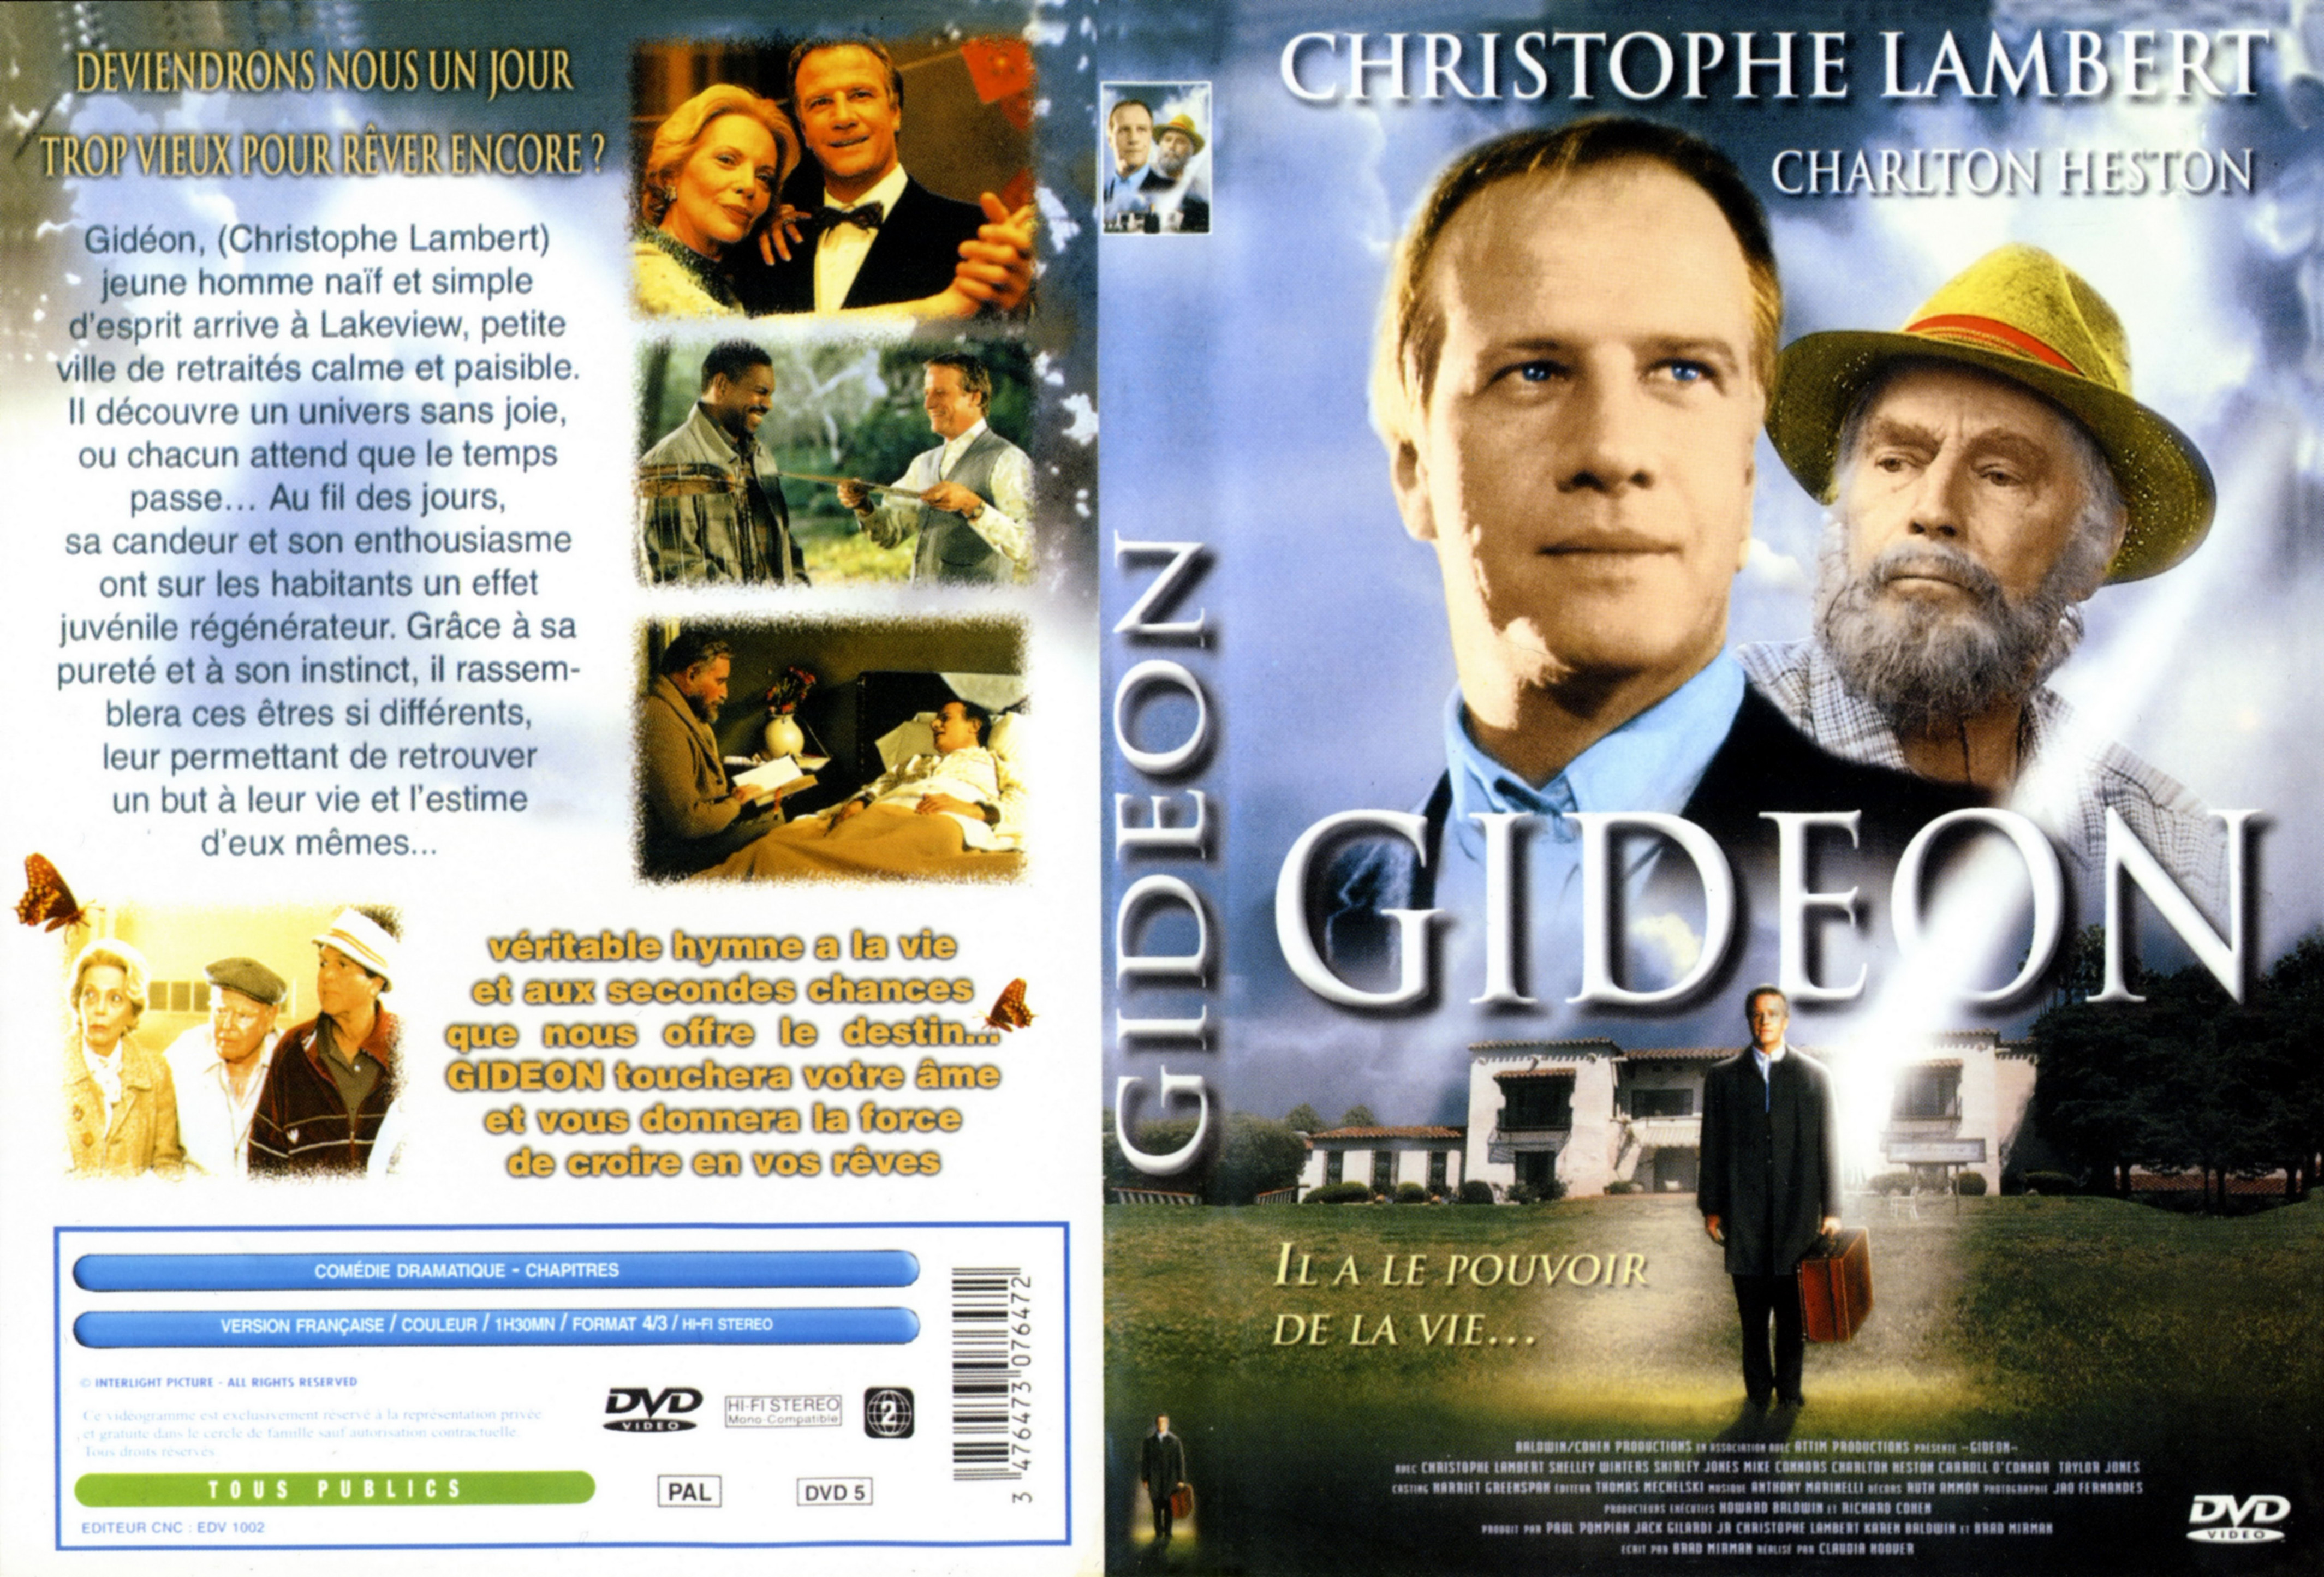 Jaquette DVD Gideon v2